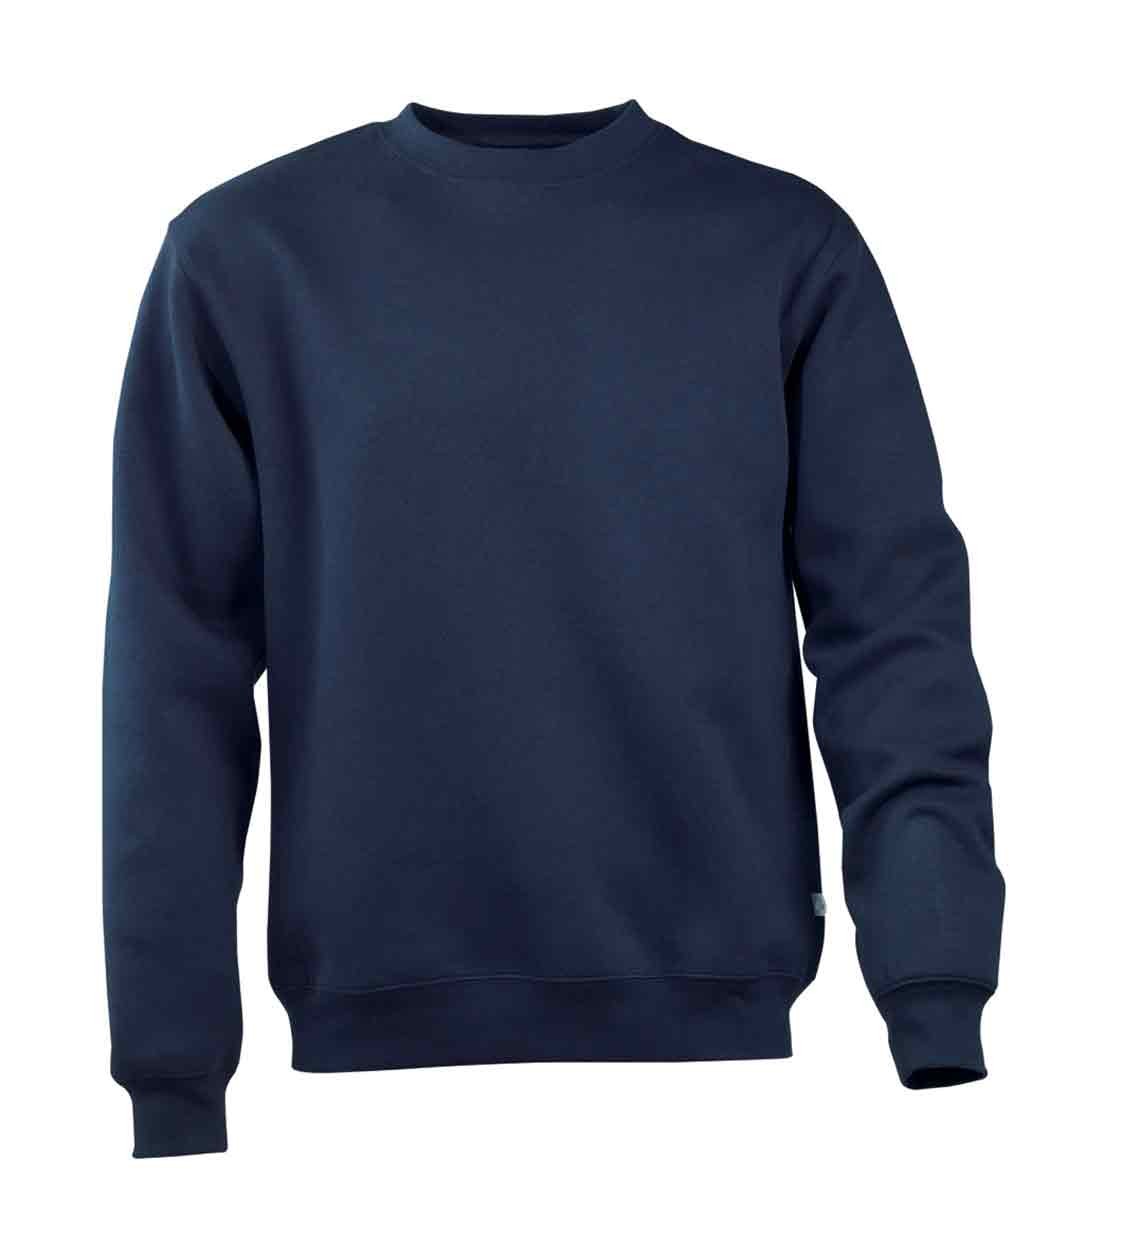 Acode 1706 Round Neck Sweatshirt - Workwear Sweatshirts - Workwear Tops -  Workwear - Best Workwear